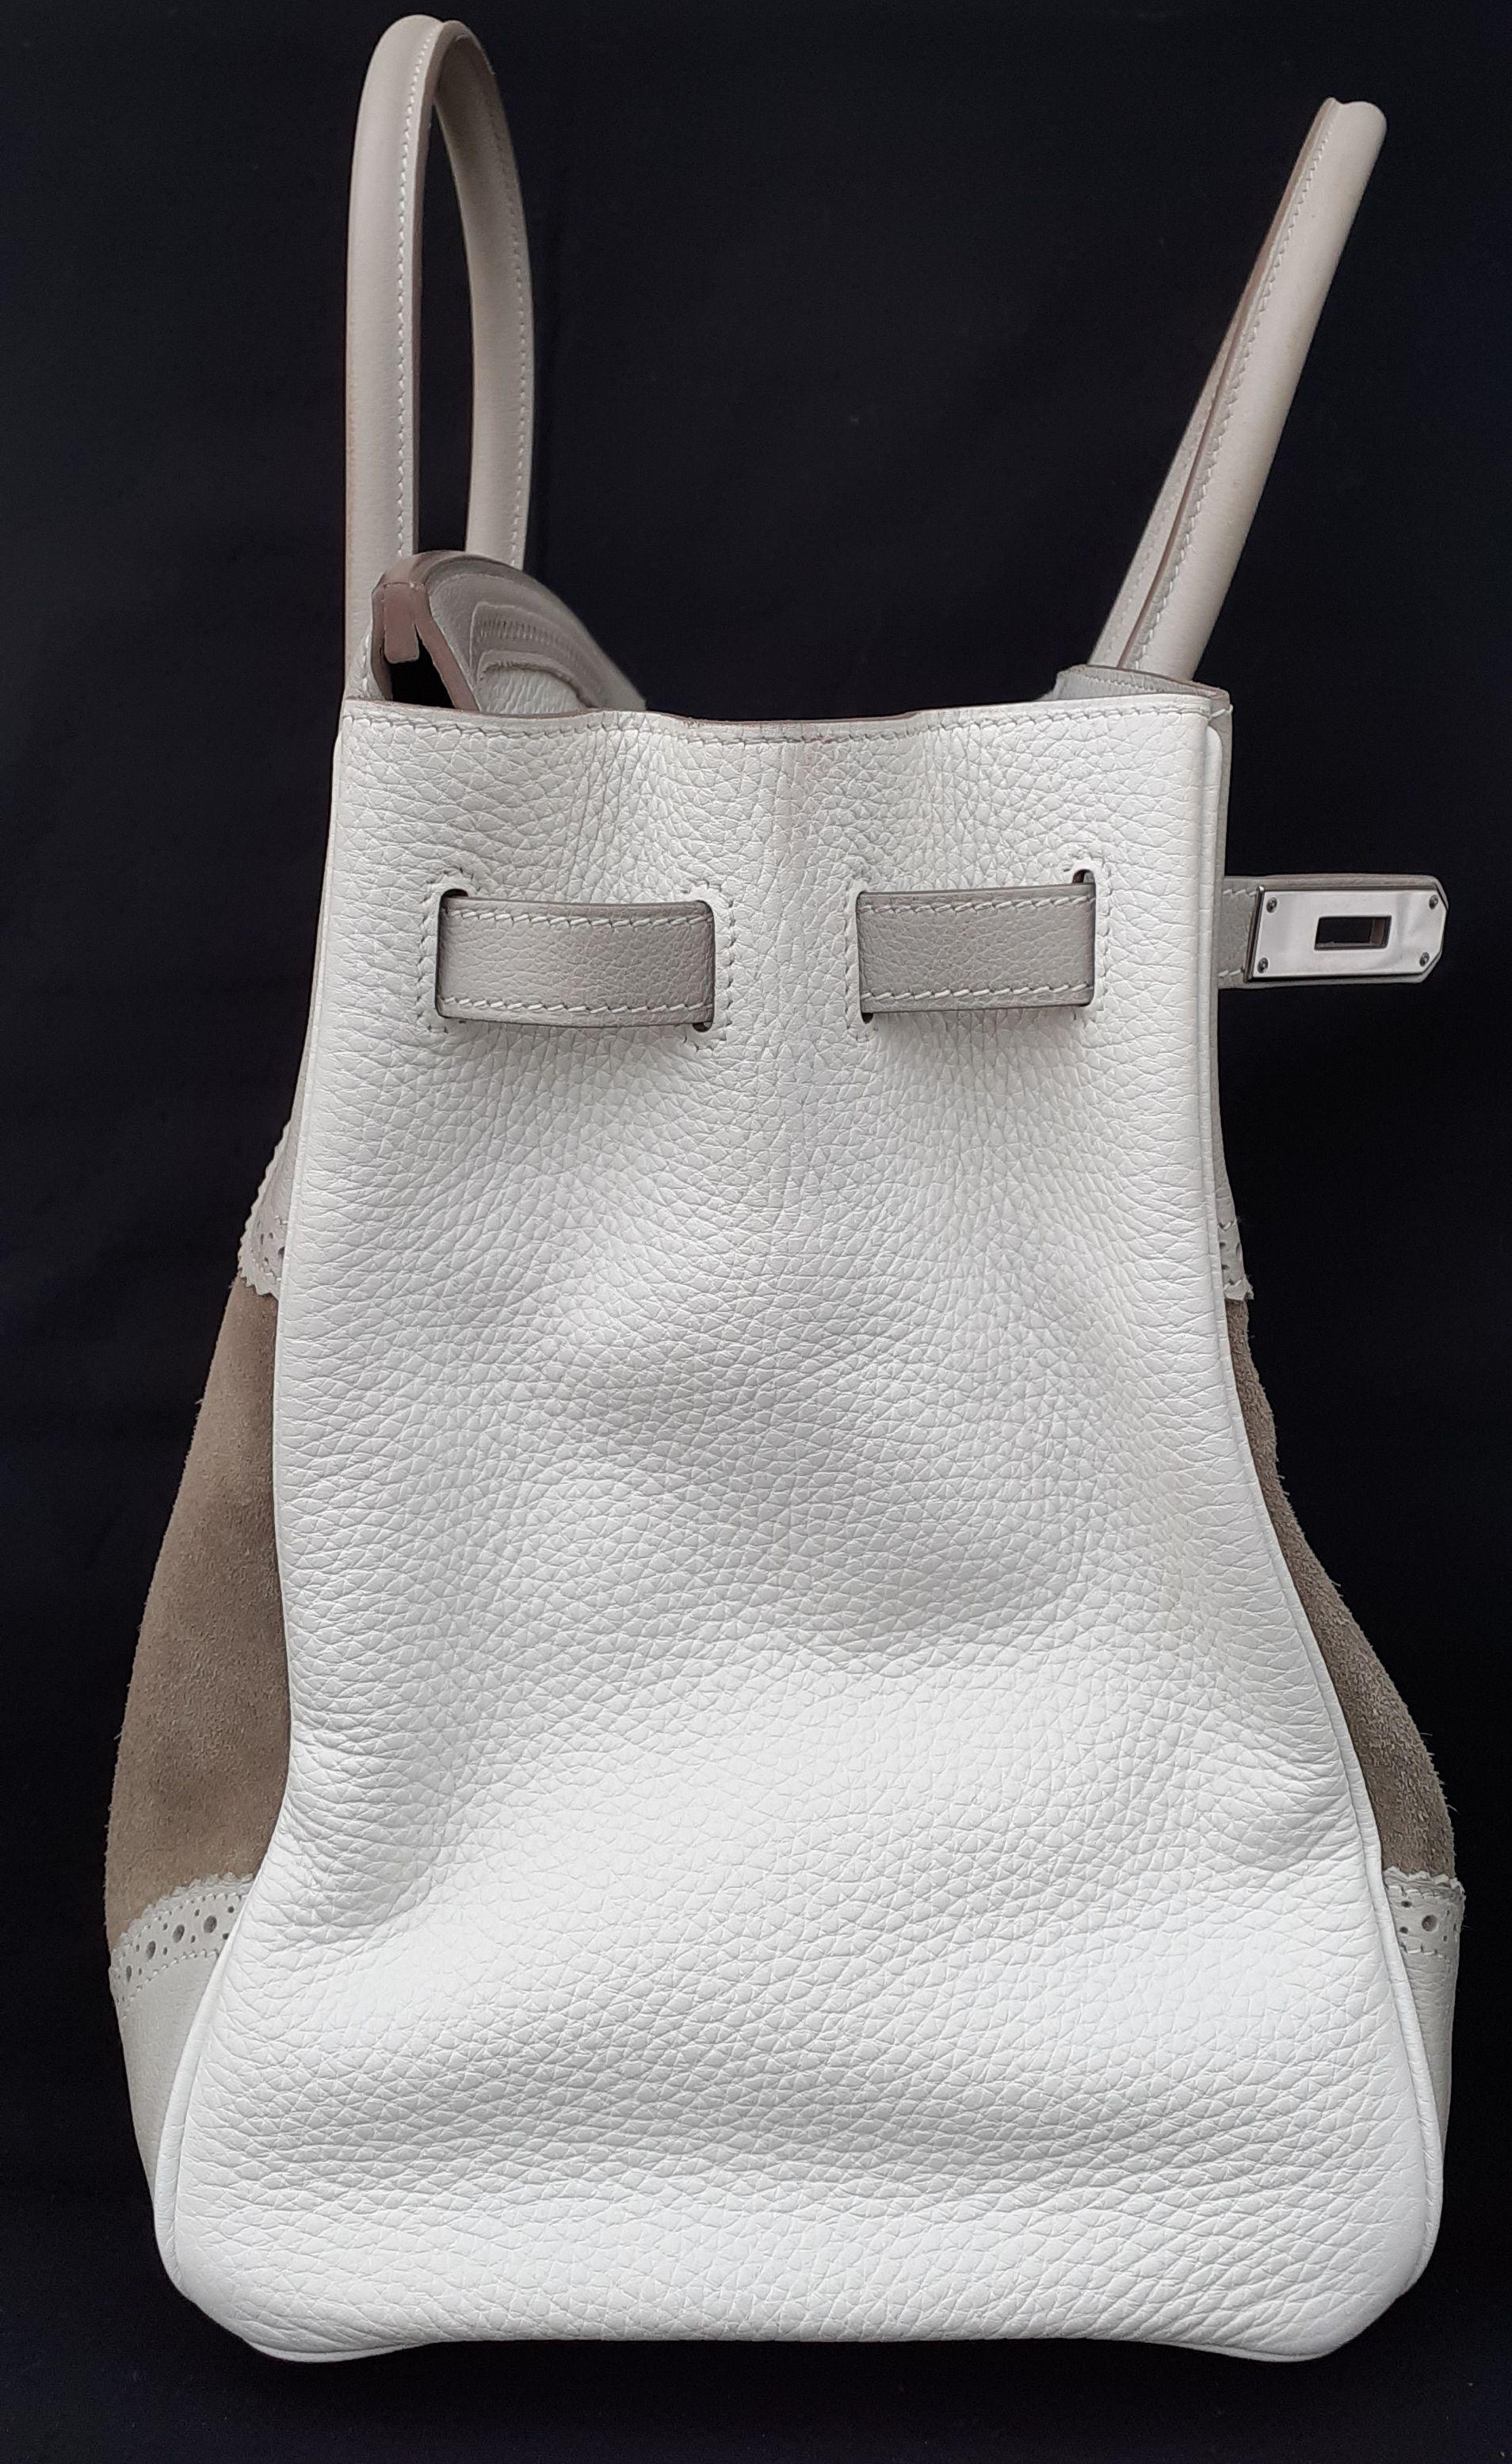 Hermès Birkin 35 Tasche Limited Edition Ghillies Grizzly Doblis Grau Weiß Caillou im Angebot 14